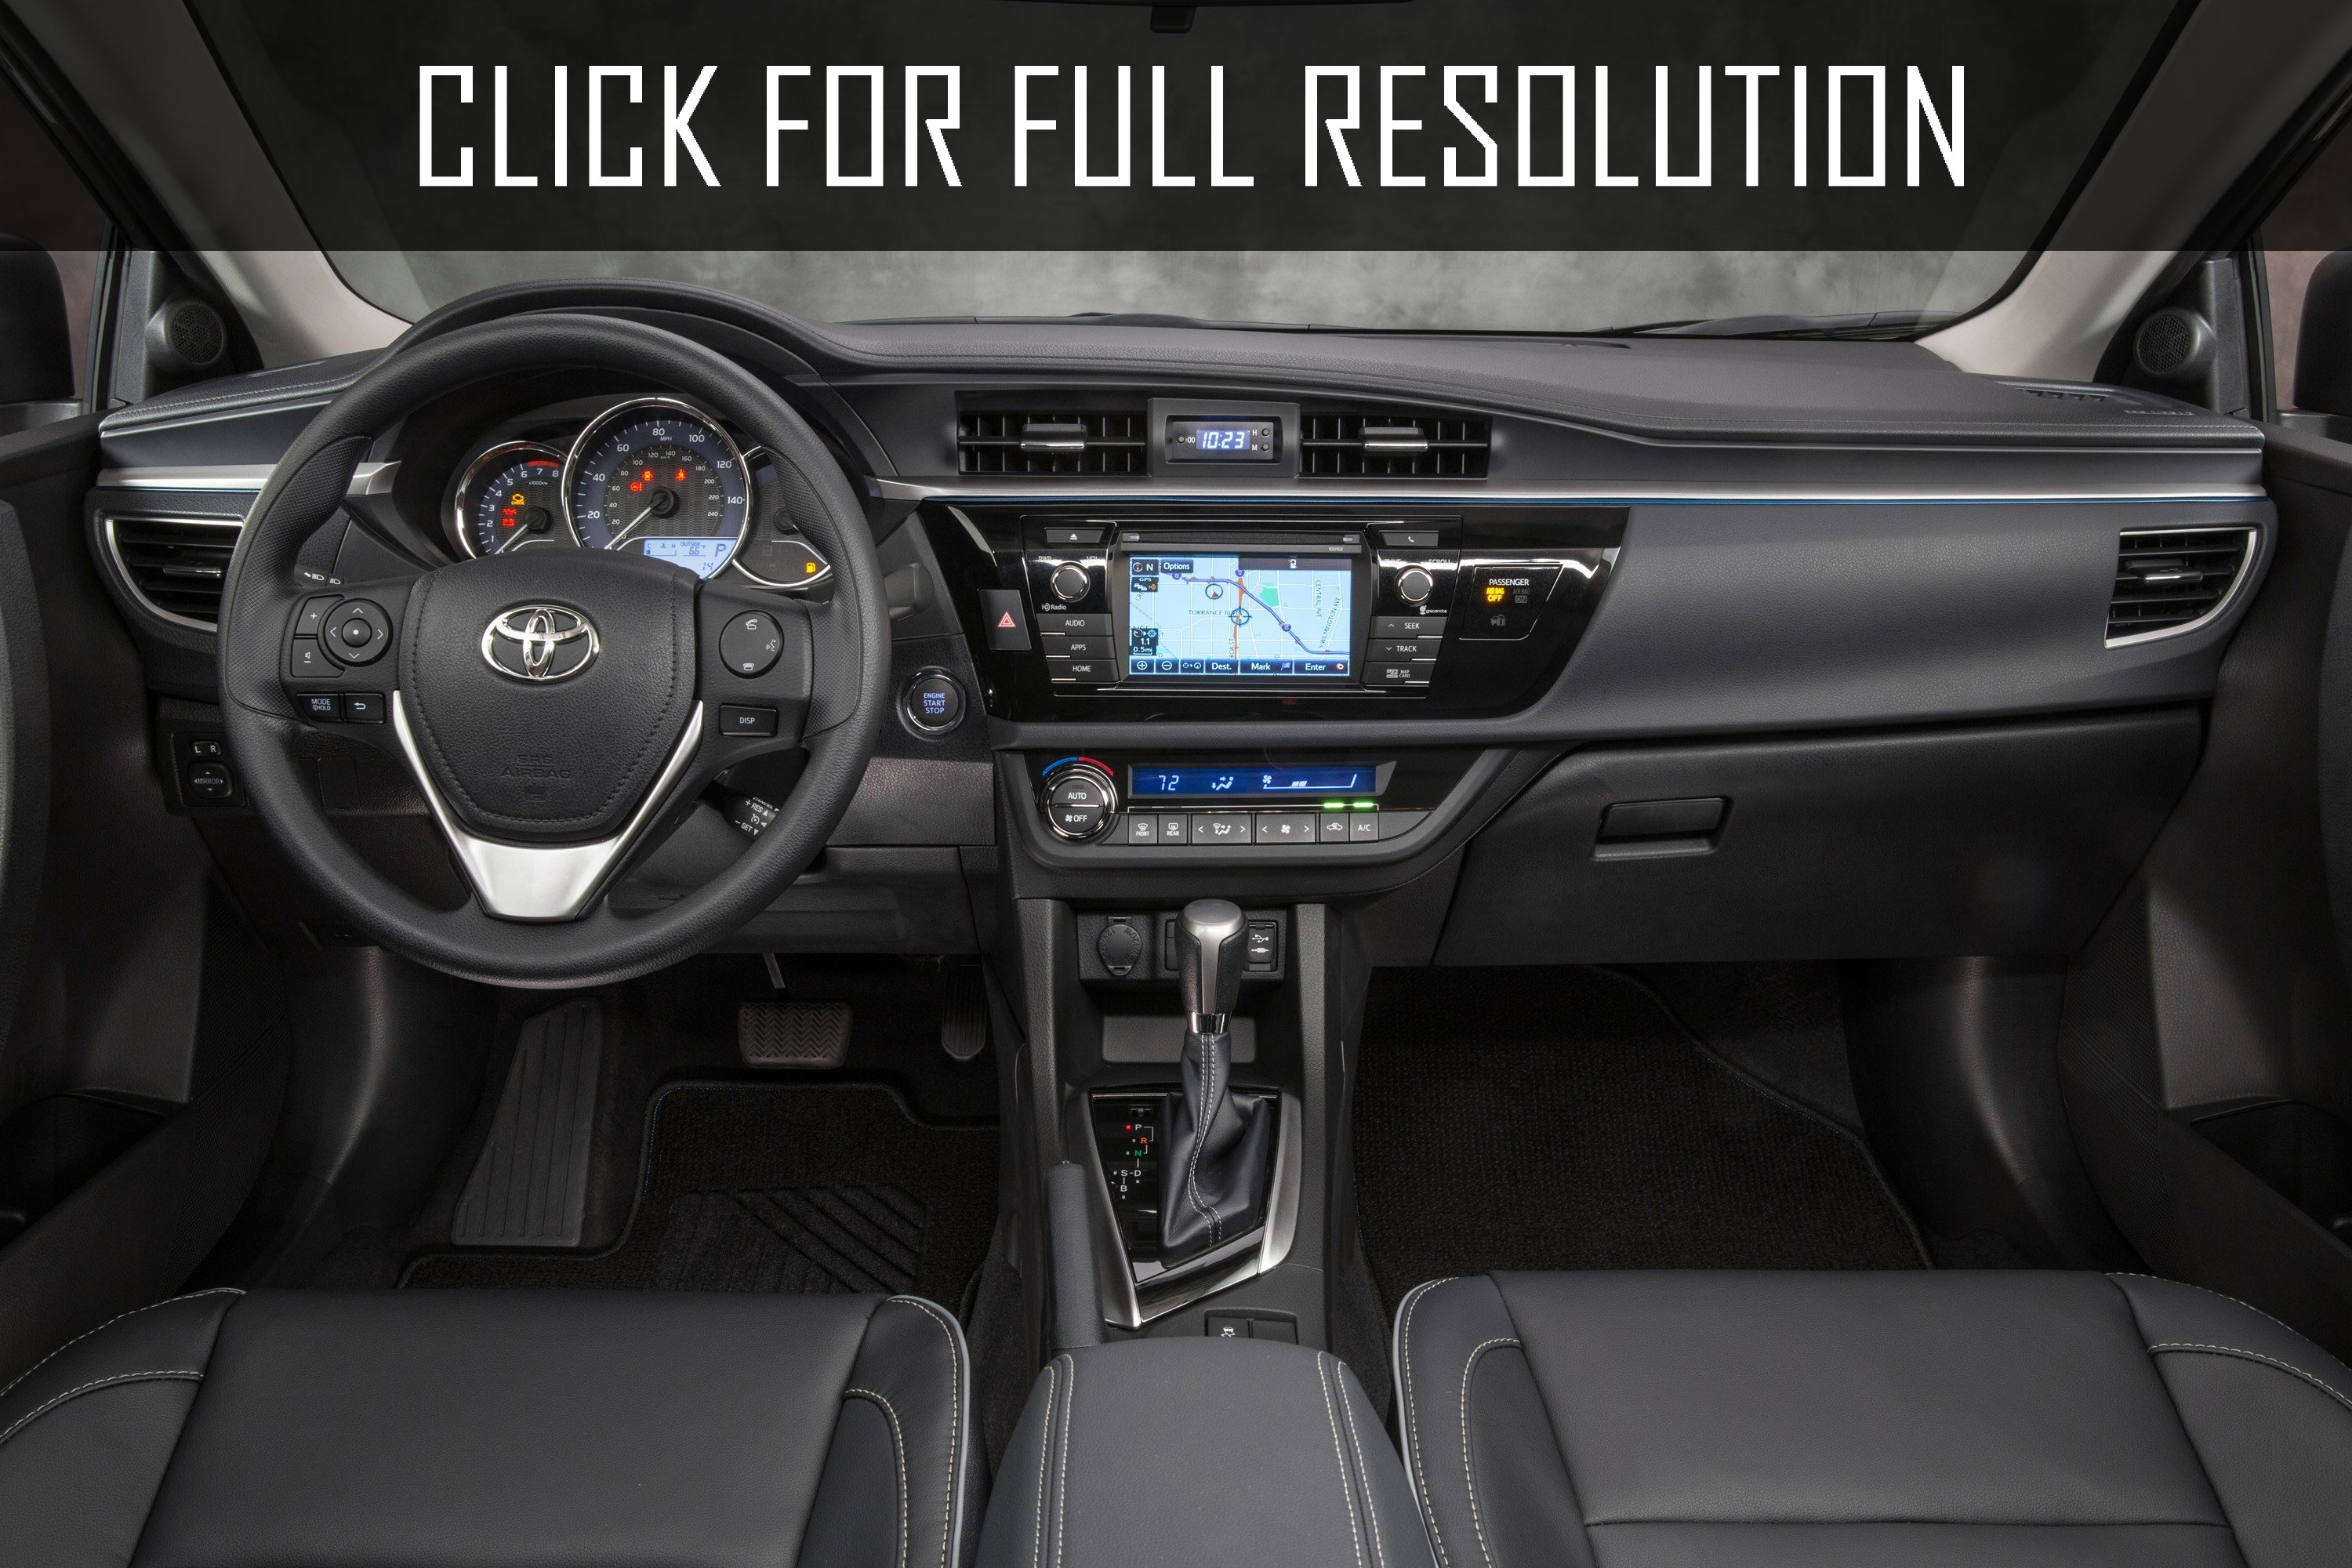 Toyota Corolla Le Premium 2015